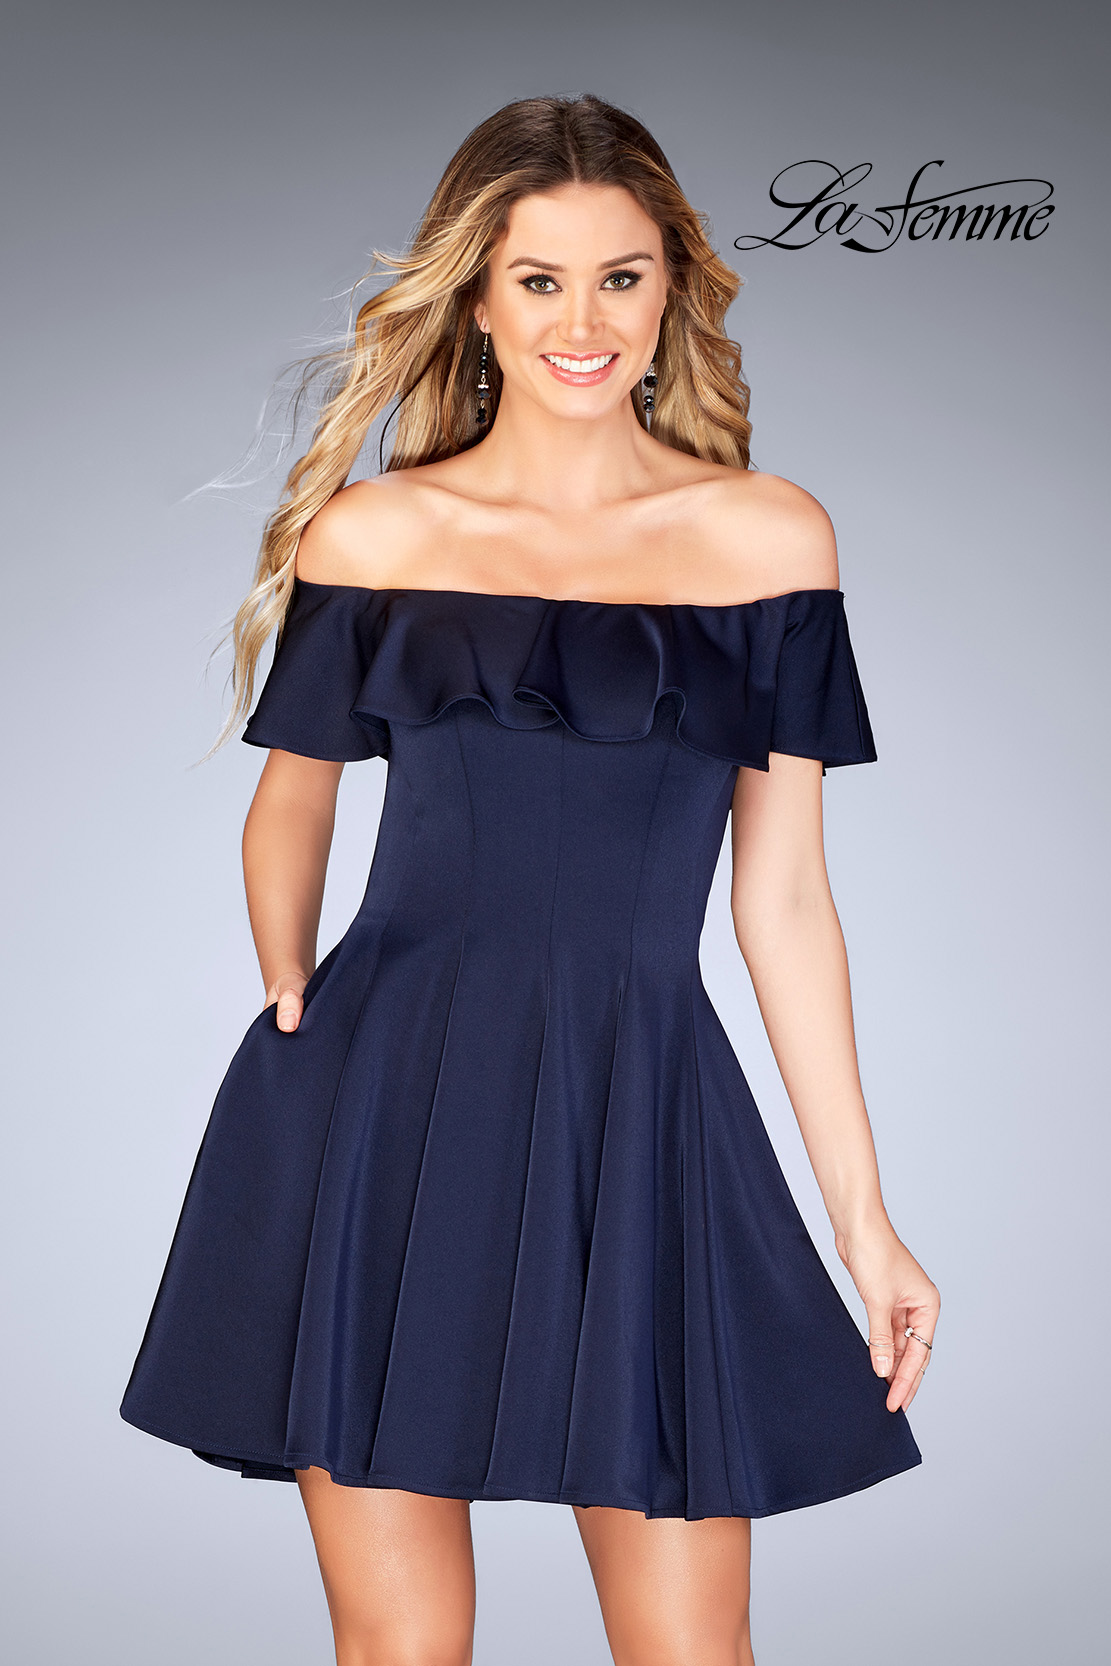 la femme navy blue dress